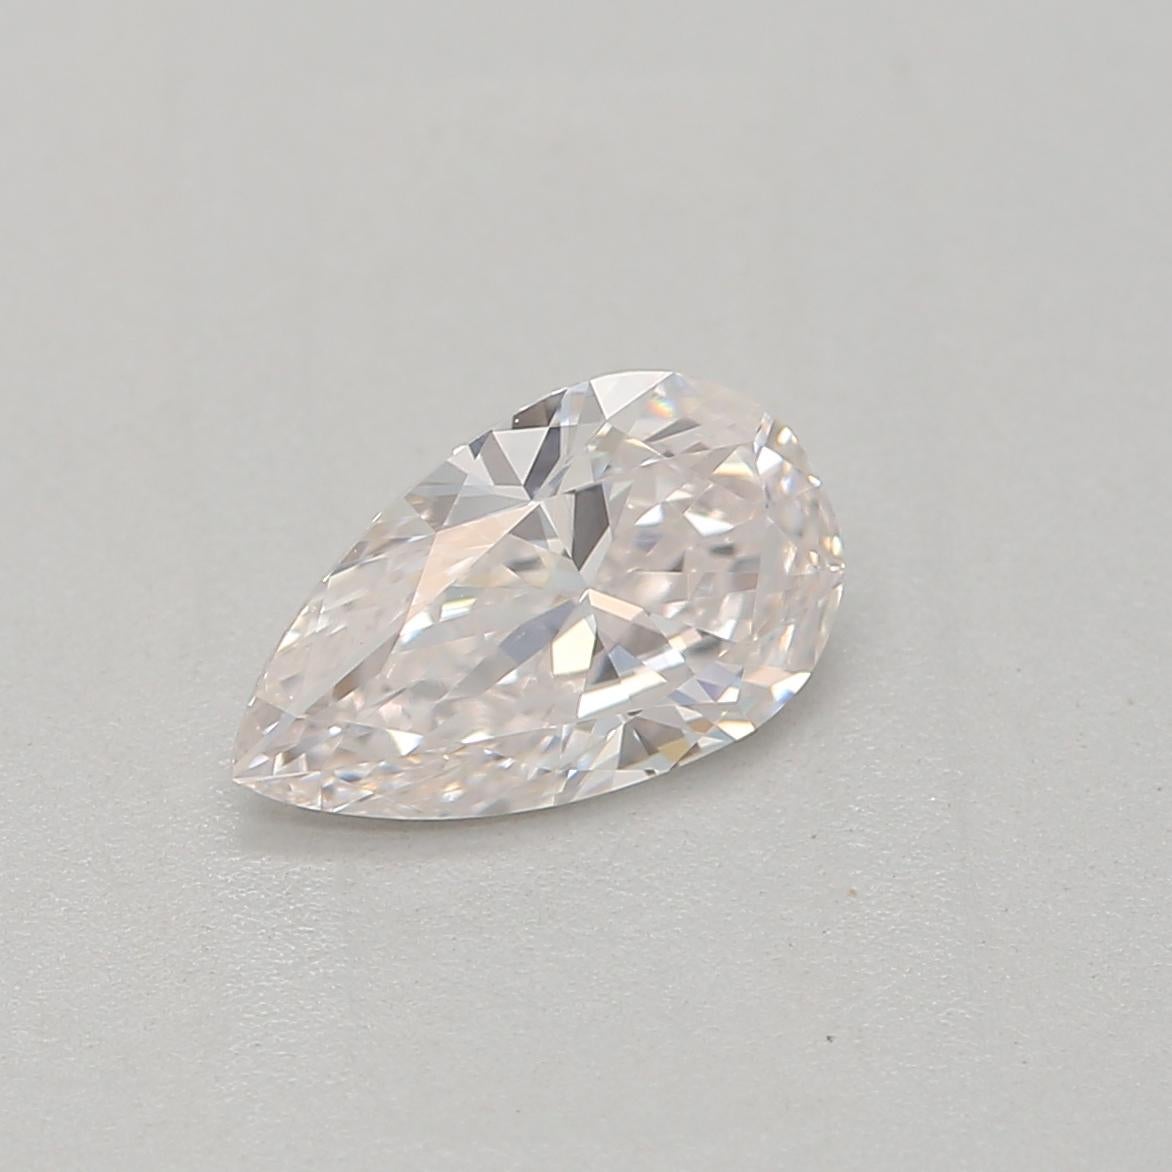 *100% NATURAL FANCY COLOUR DIAMOND*

✪ Diamond Details ✪

➛ Shape: Pear
➛ Colour Grade: Faint Pink
➛ Carat: 0.41
➛ Clarity: VS2
➛ GIA Certified 

^FEATURES OF THE DIAMOND^

Our faint pink diamond exhibits a subtle pink hue. These diamonds are rare